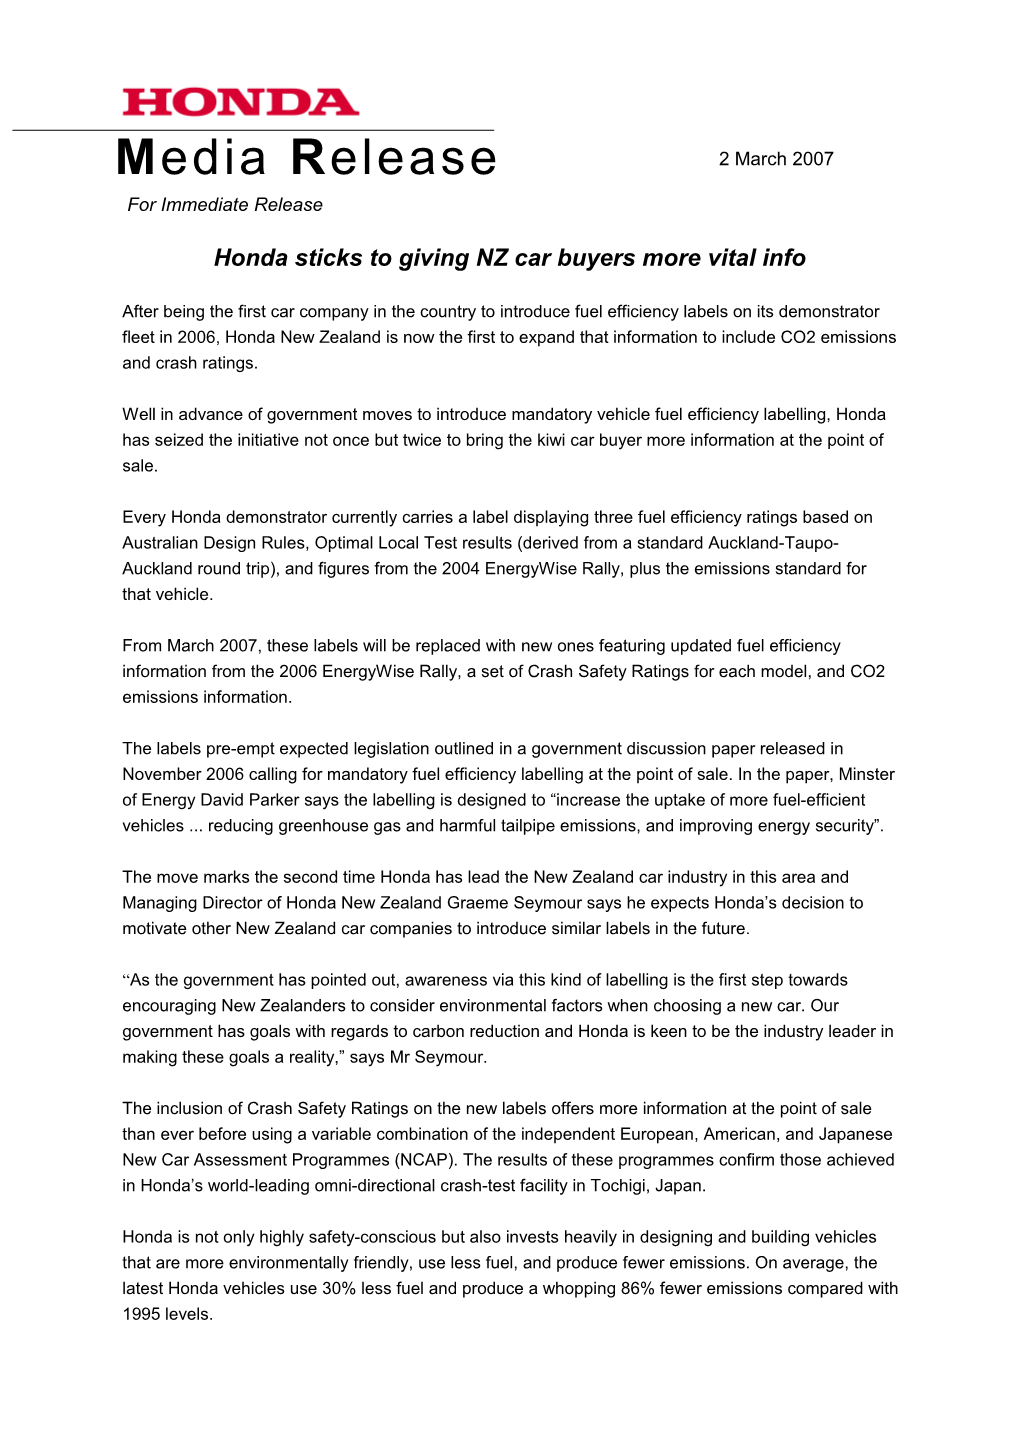 Honda Sticks to Giving NZ Car Buyers More Vital Info